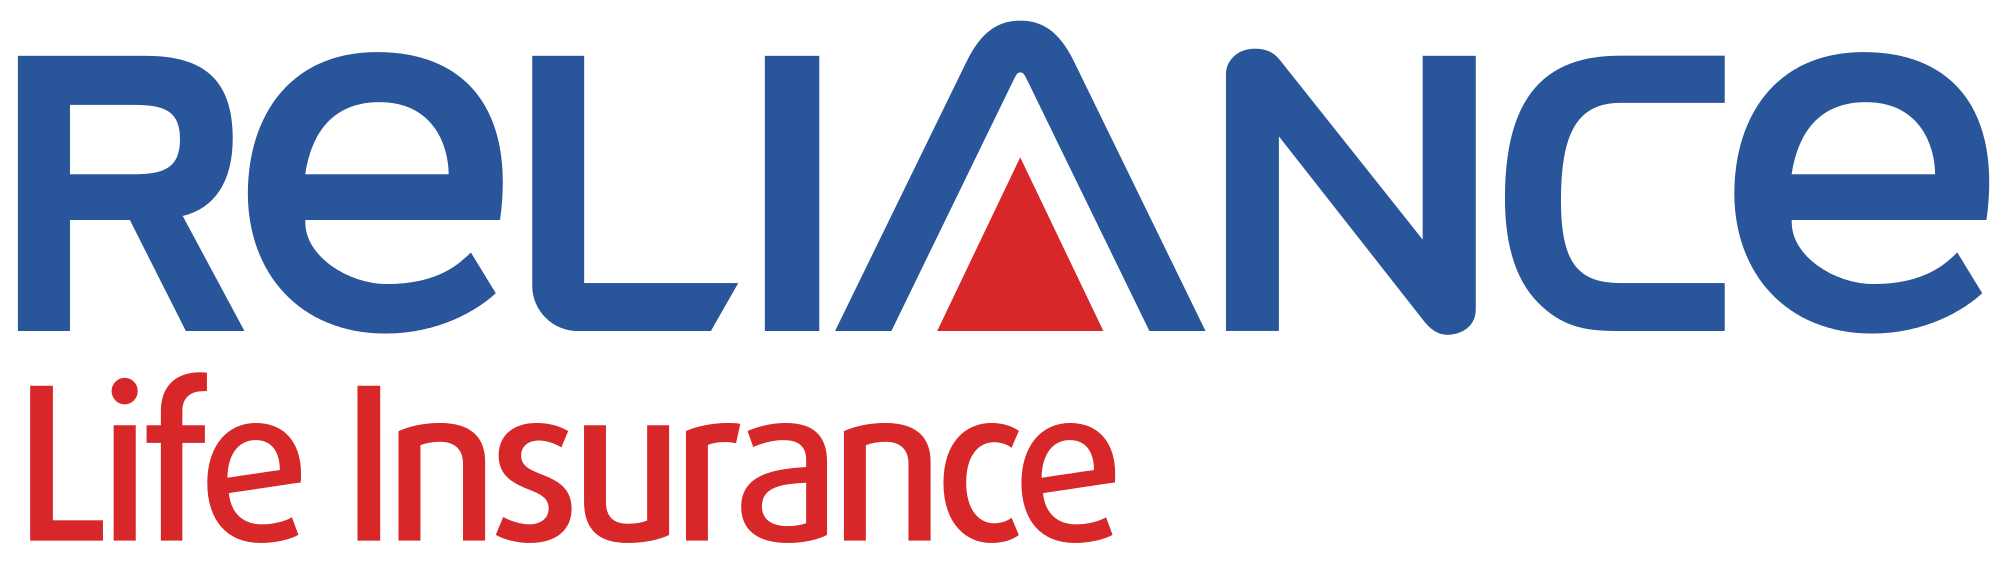 Reliance Life Insurance